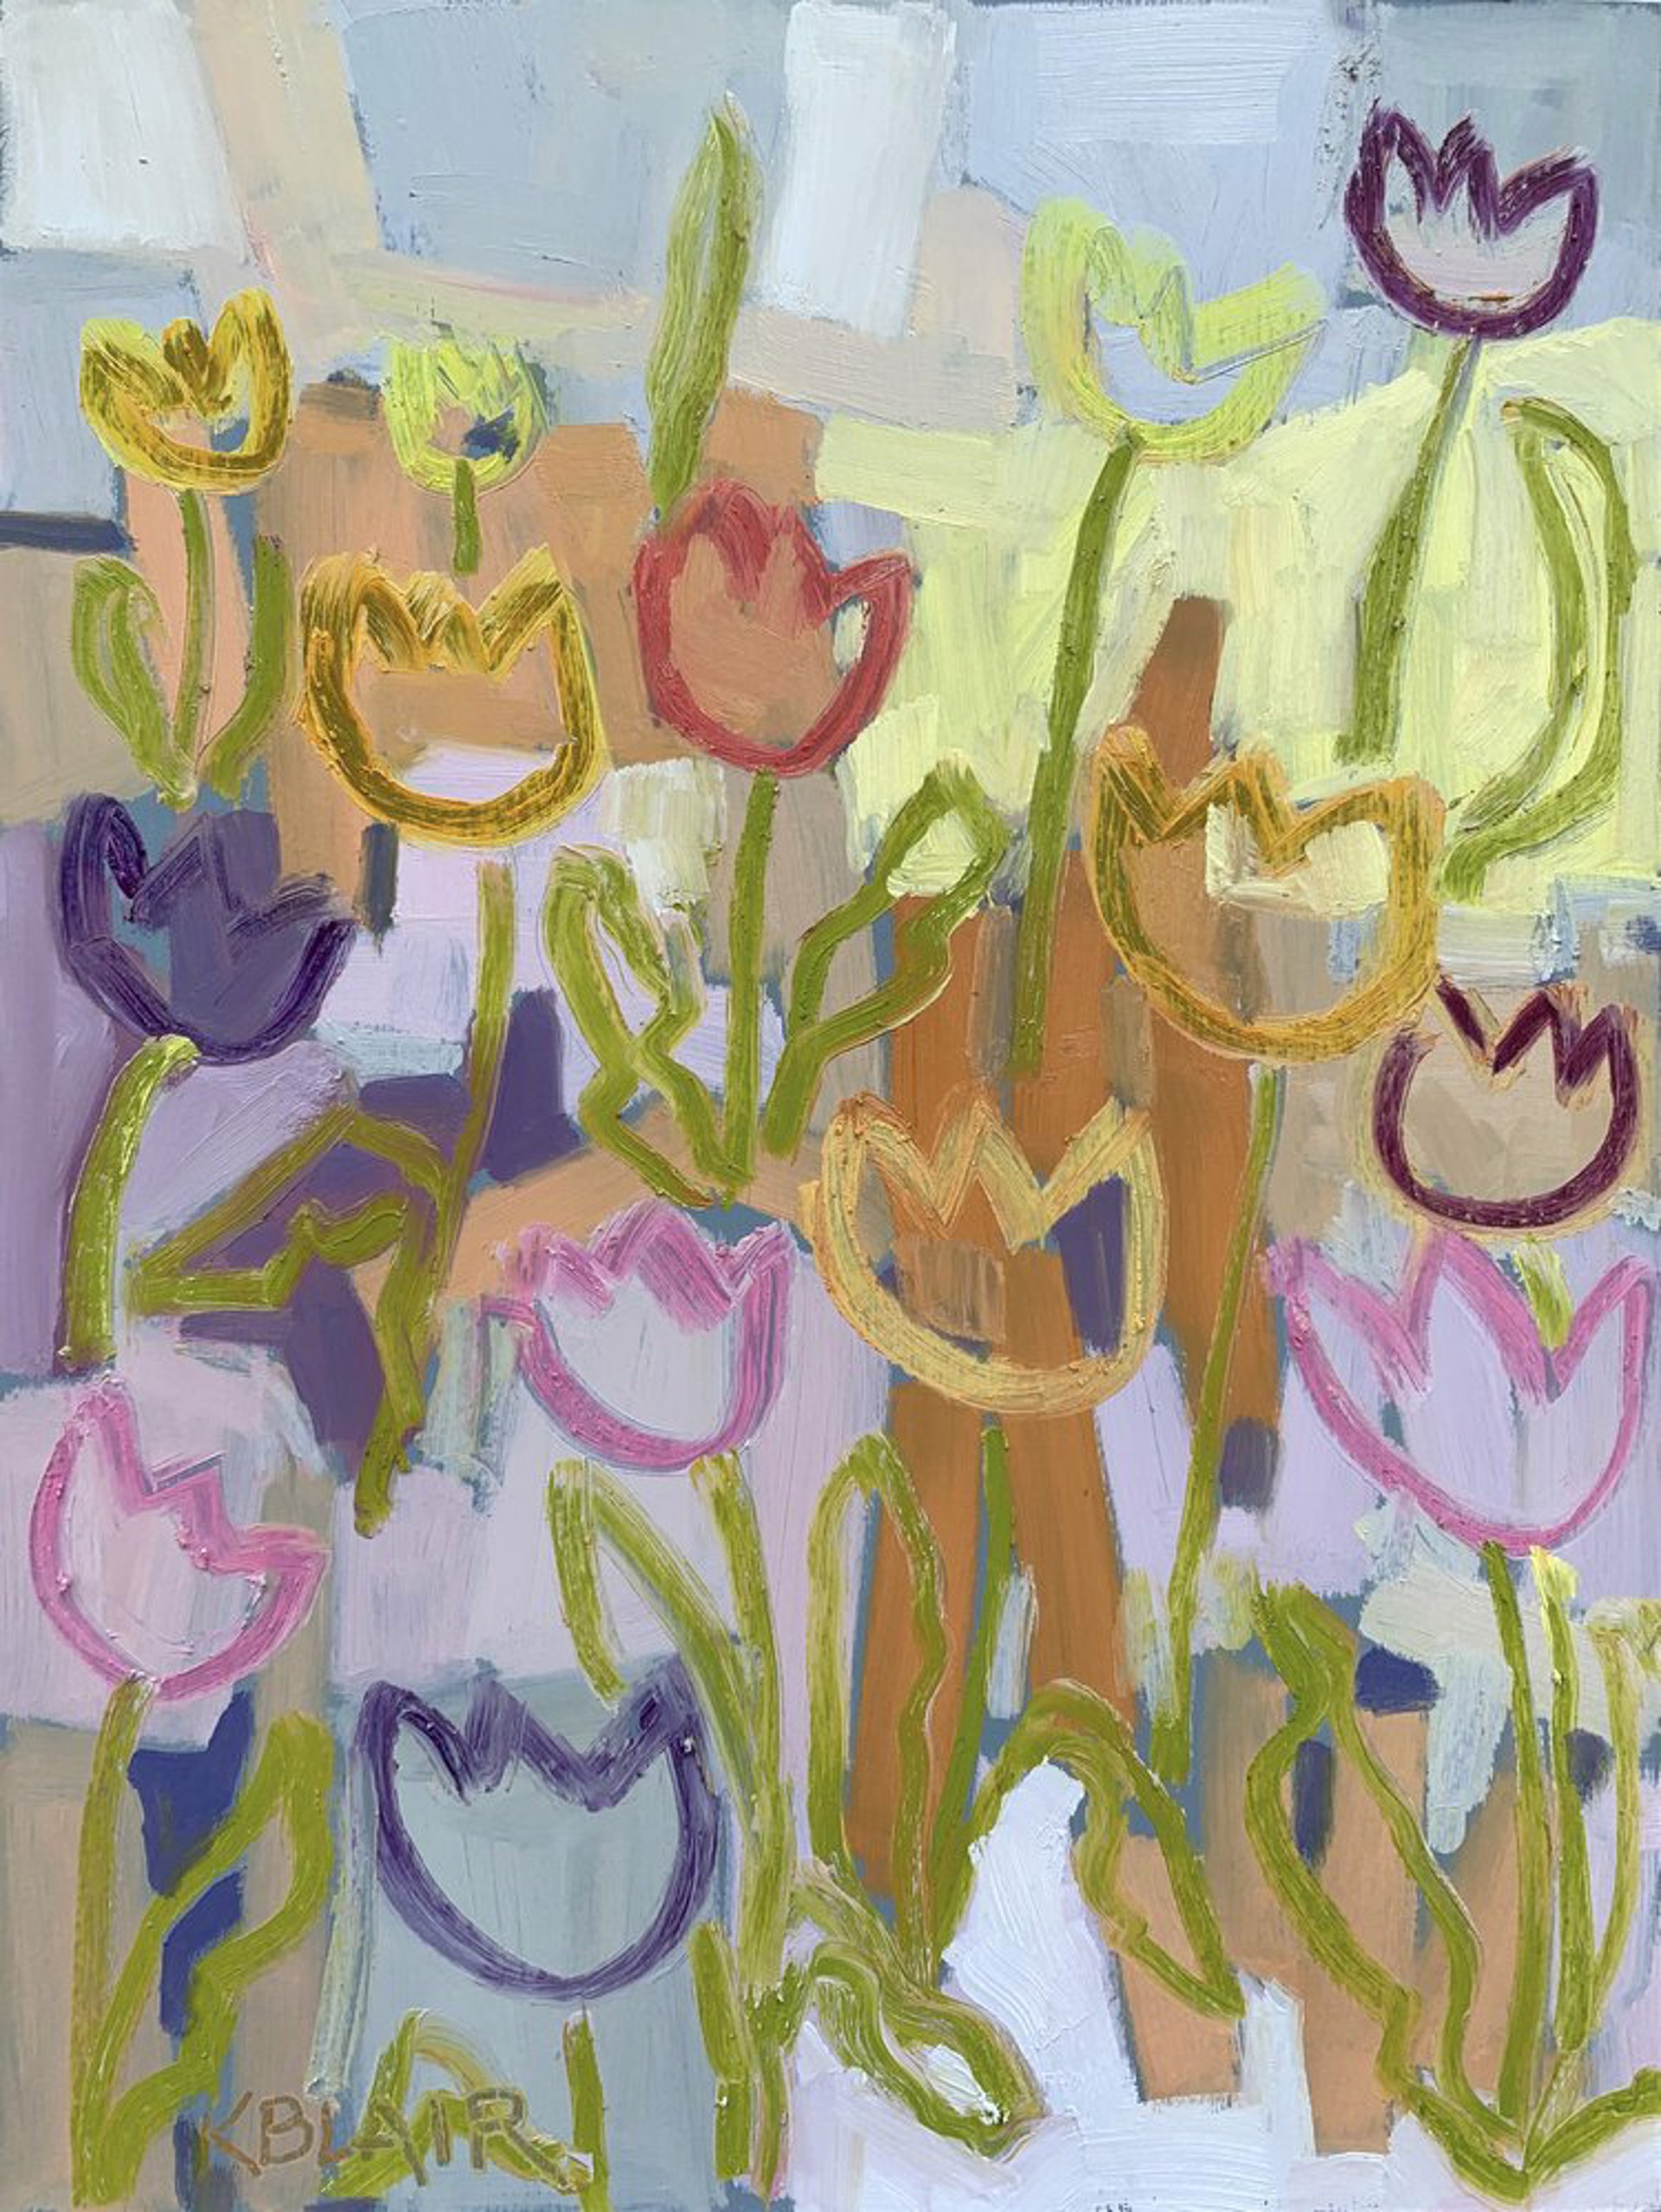 Small Garden with Tulips by Karen Blair